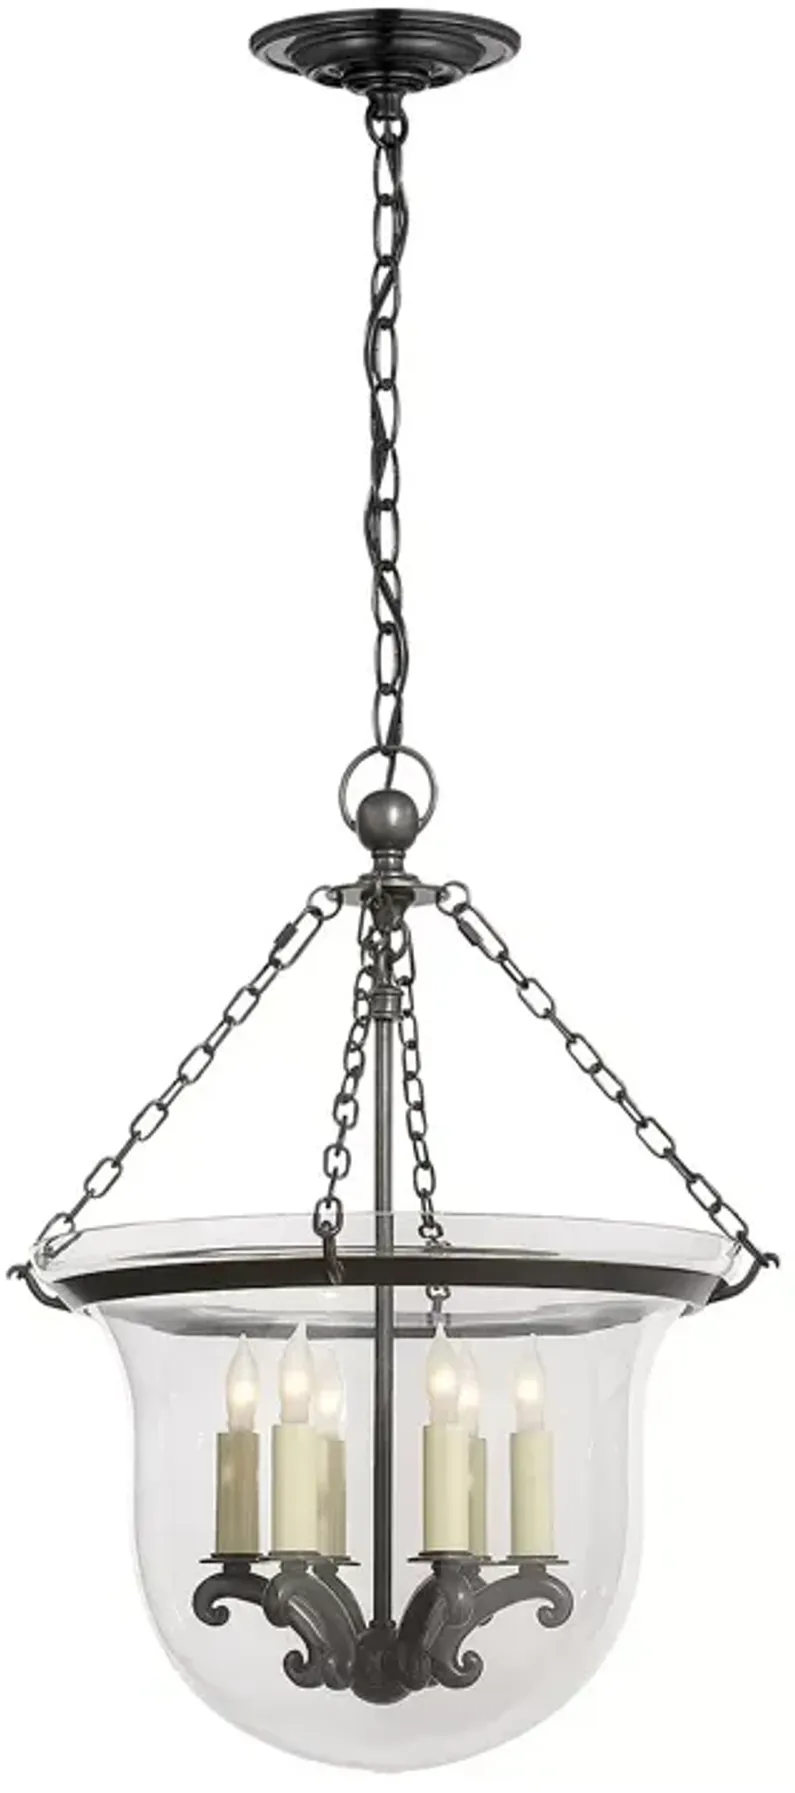 Chapman & Myers Country Medium Bell Jar Lantern